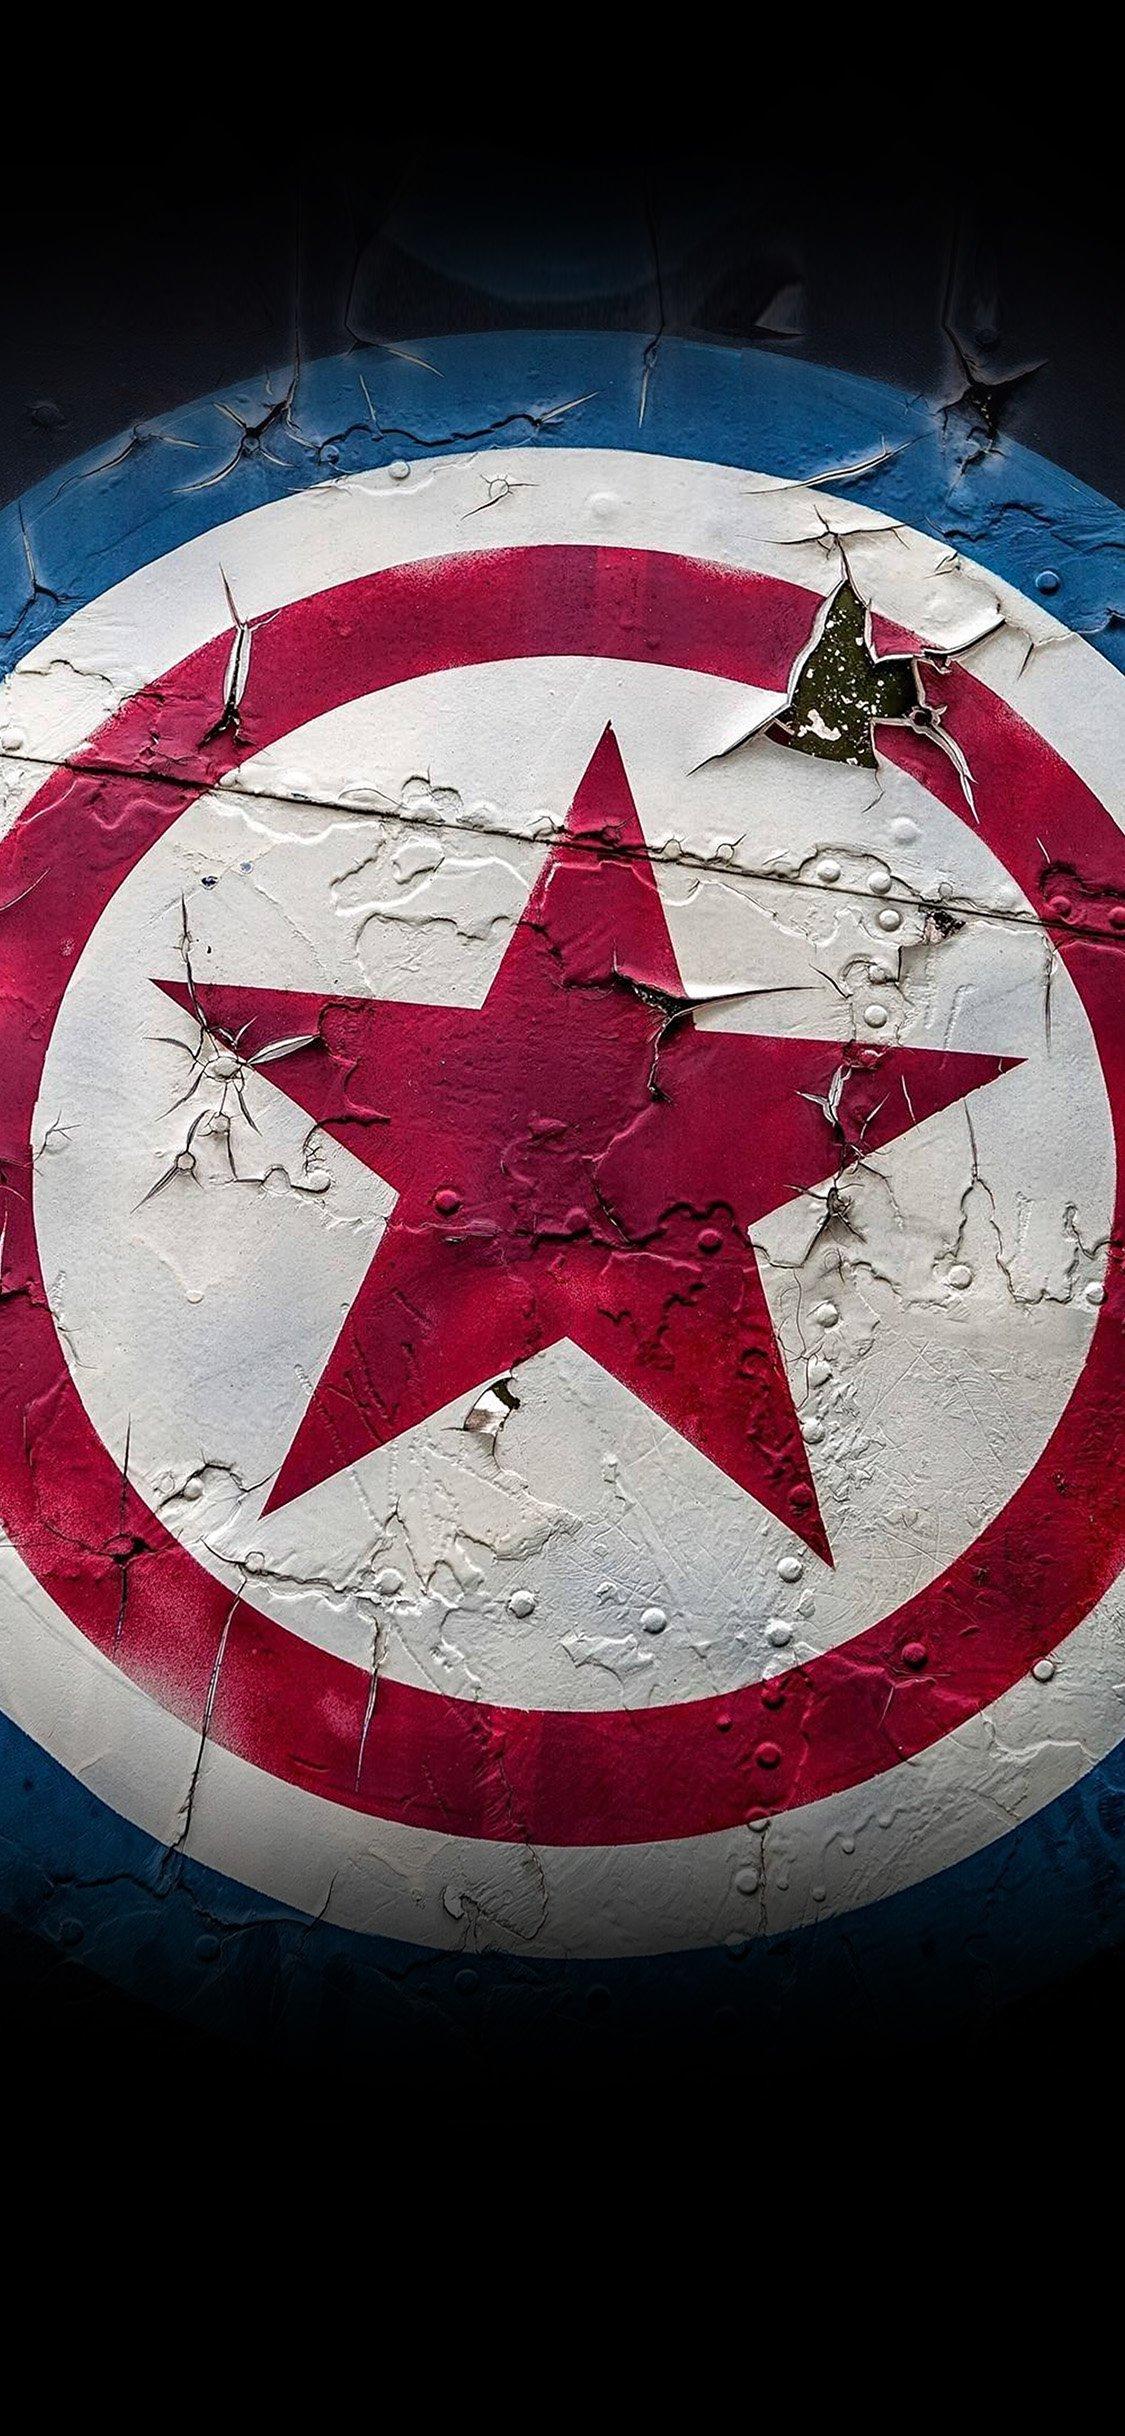 iPhone X wallpaper. captain america marvel